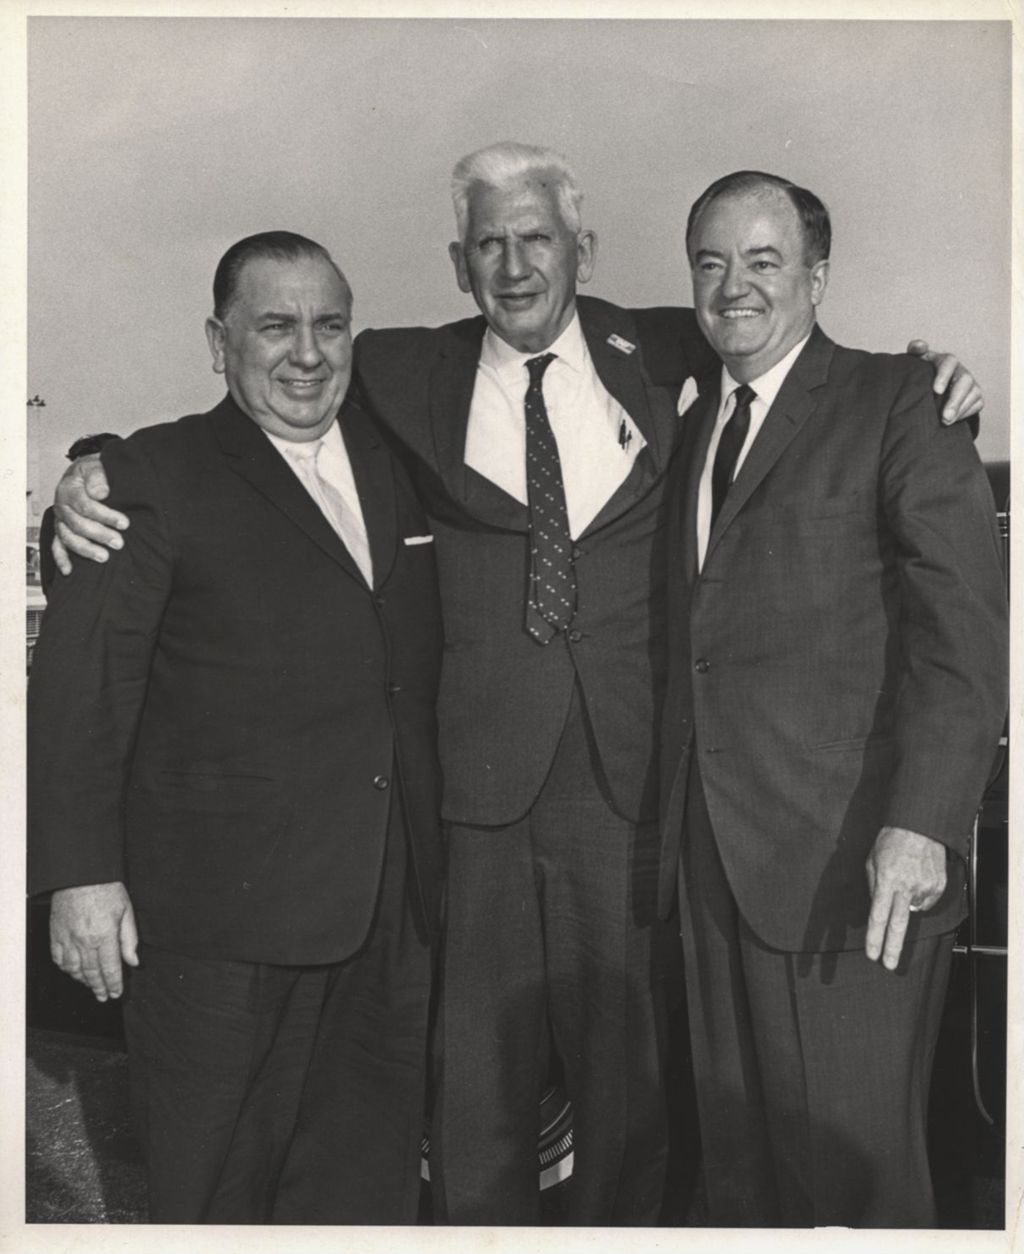 Miniature of Paul Douglas with Richard J. Daley and Hubert Humphrey